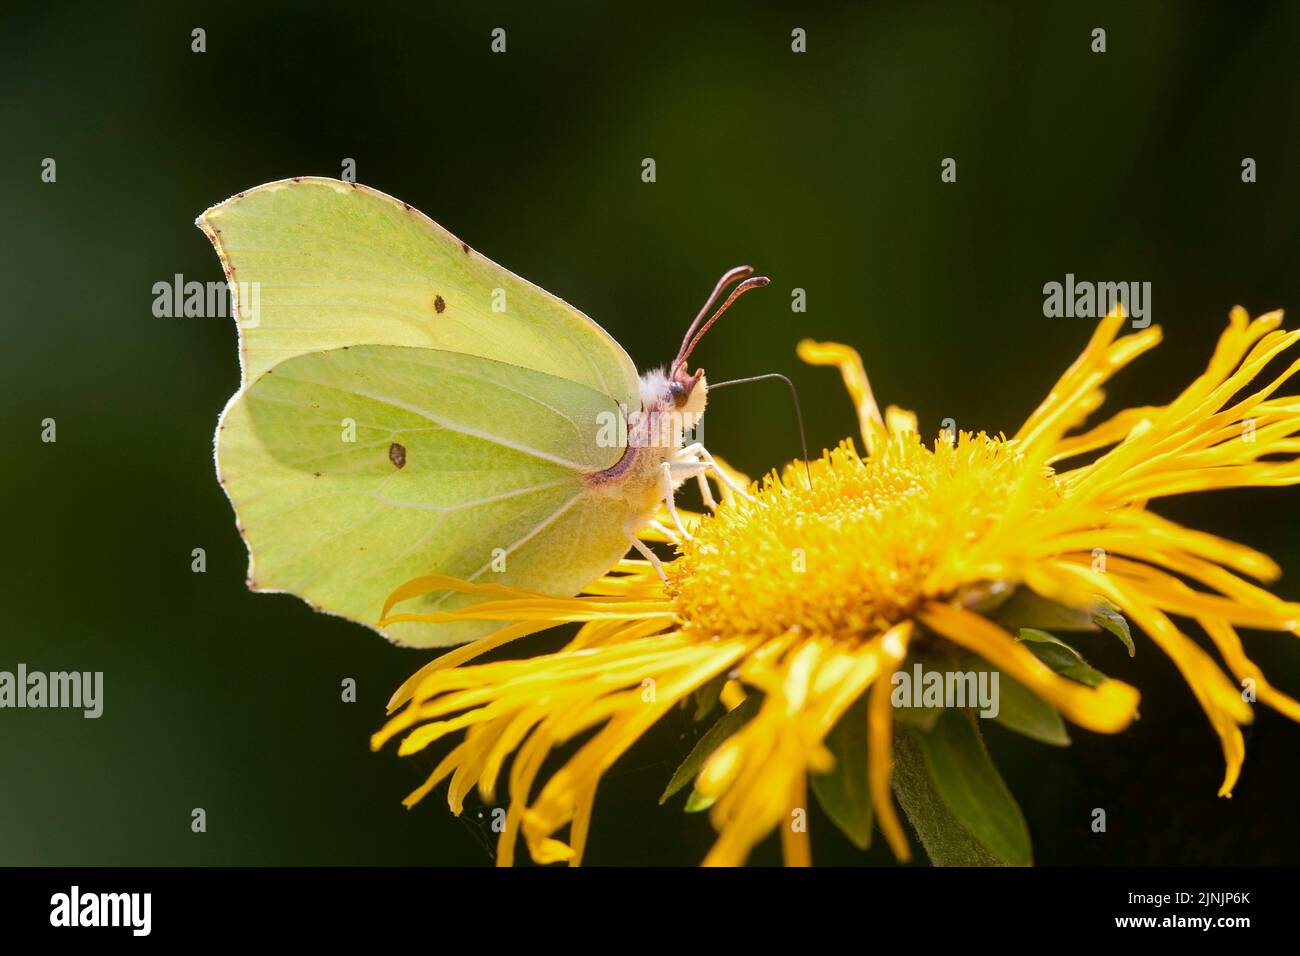 brimstone (Gonepteryx rhamni), sucking nectar from a yellow flower, Germany Stock Photo